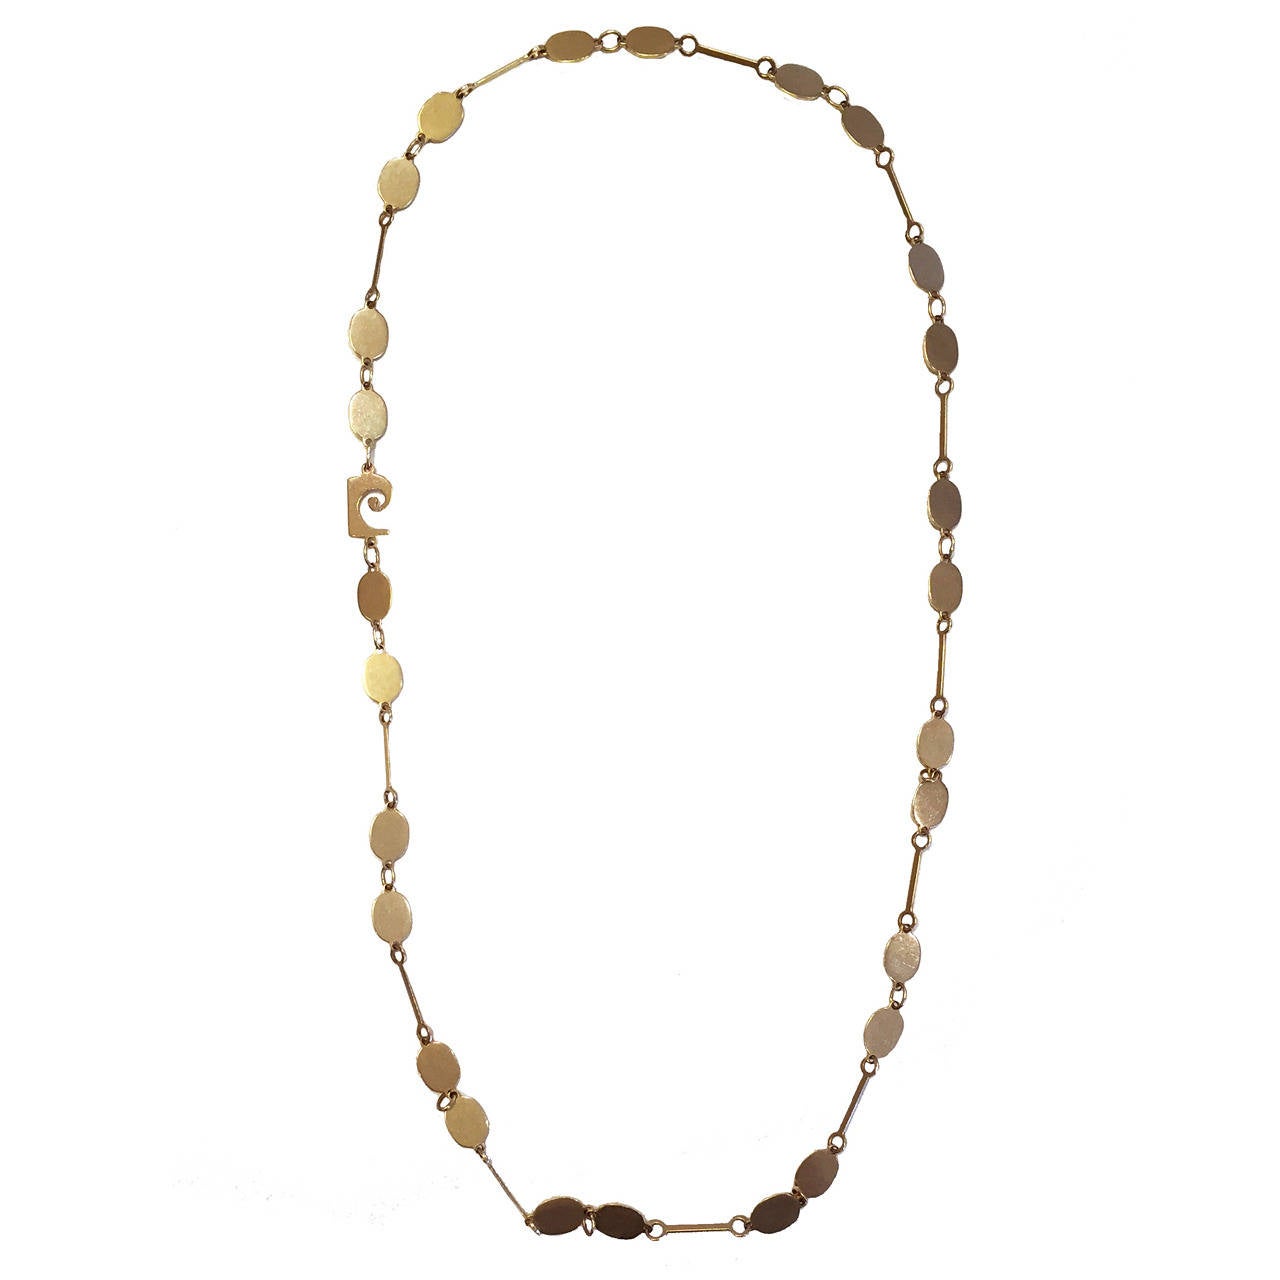 1970 Pierre Cardin Gold Necklace